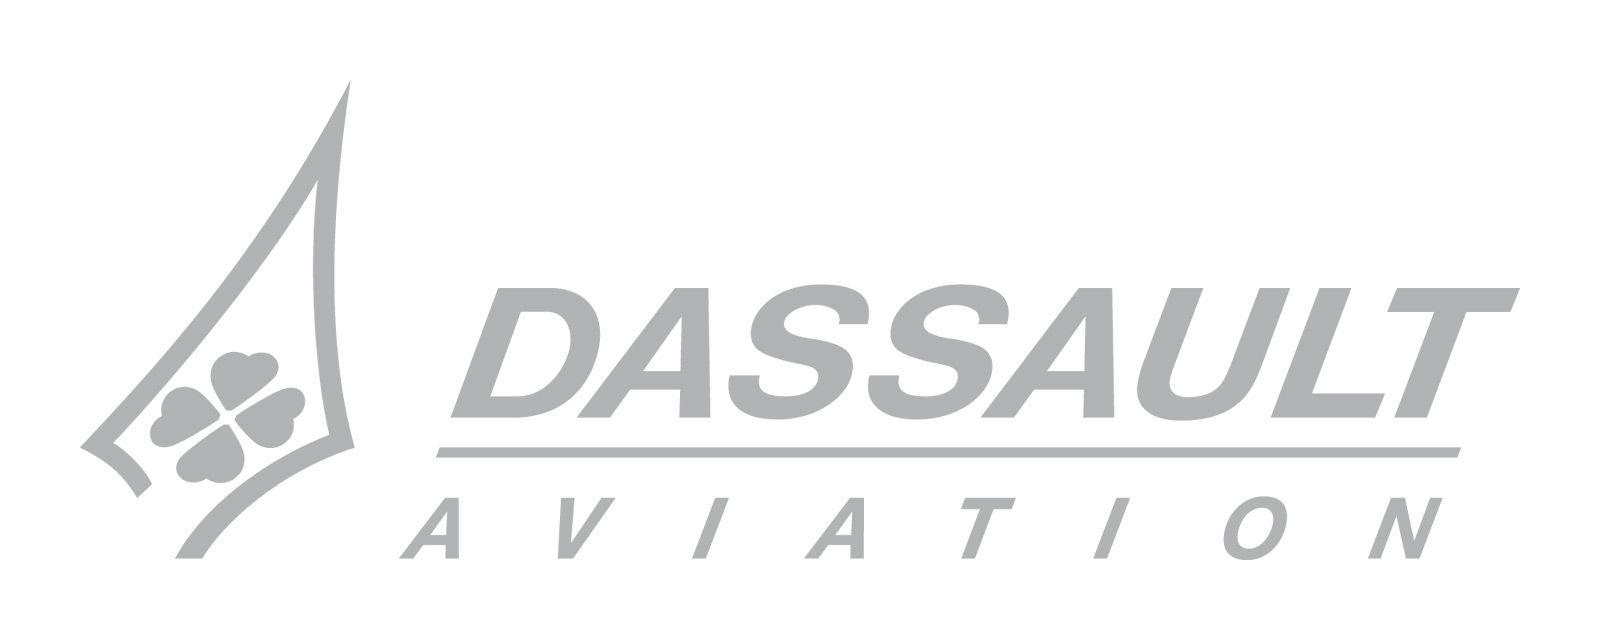 Dassault Logo - History of the Dassault Aviation logo